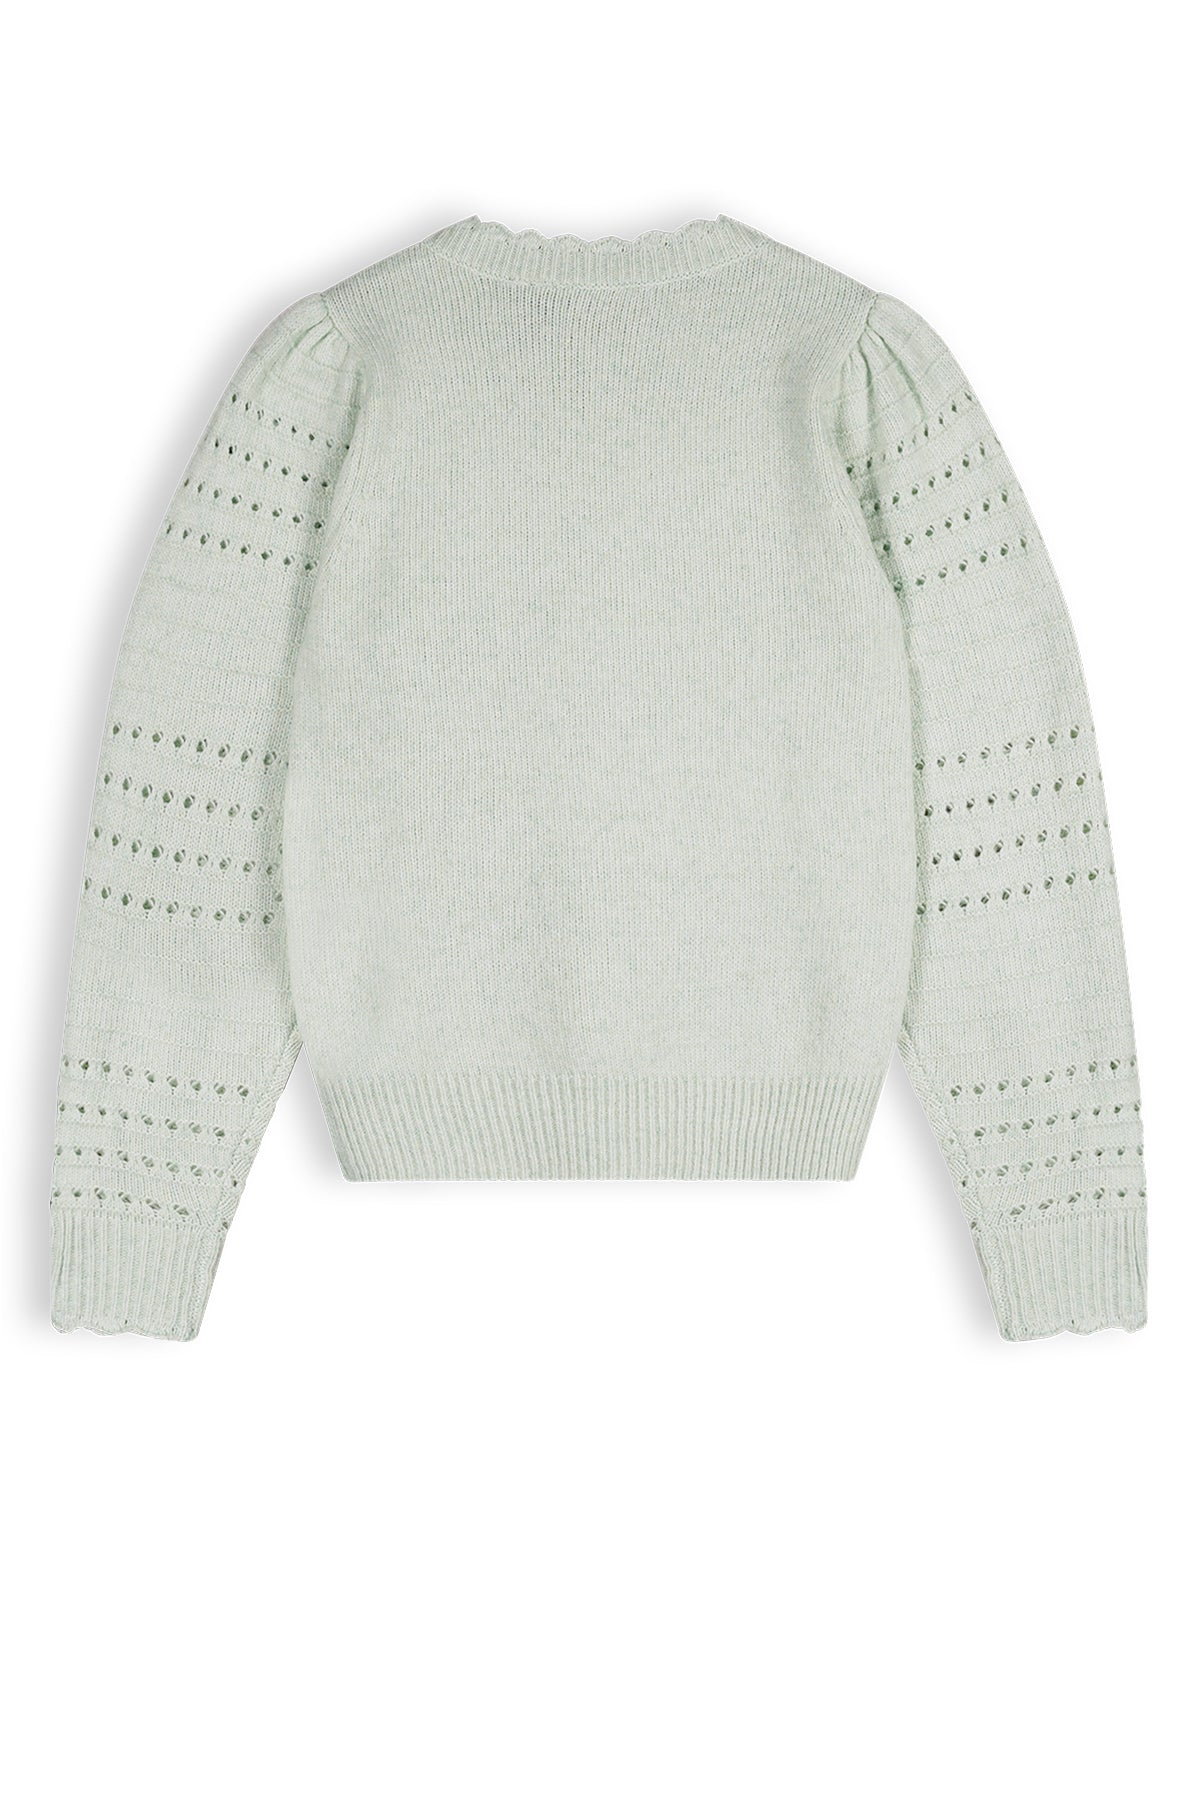 NoBell Kamile Girls Knitted Soft Sweater